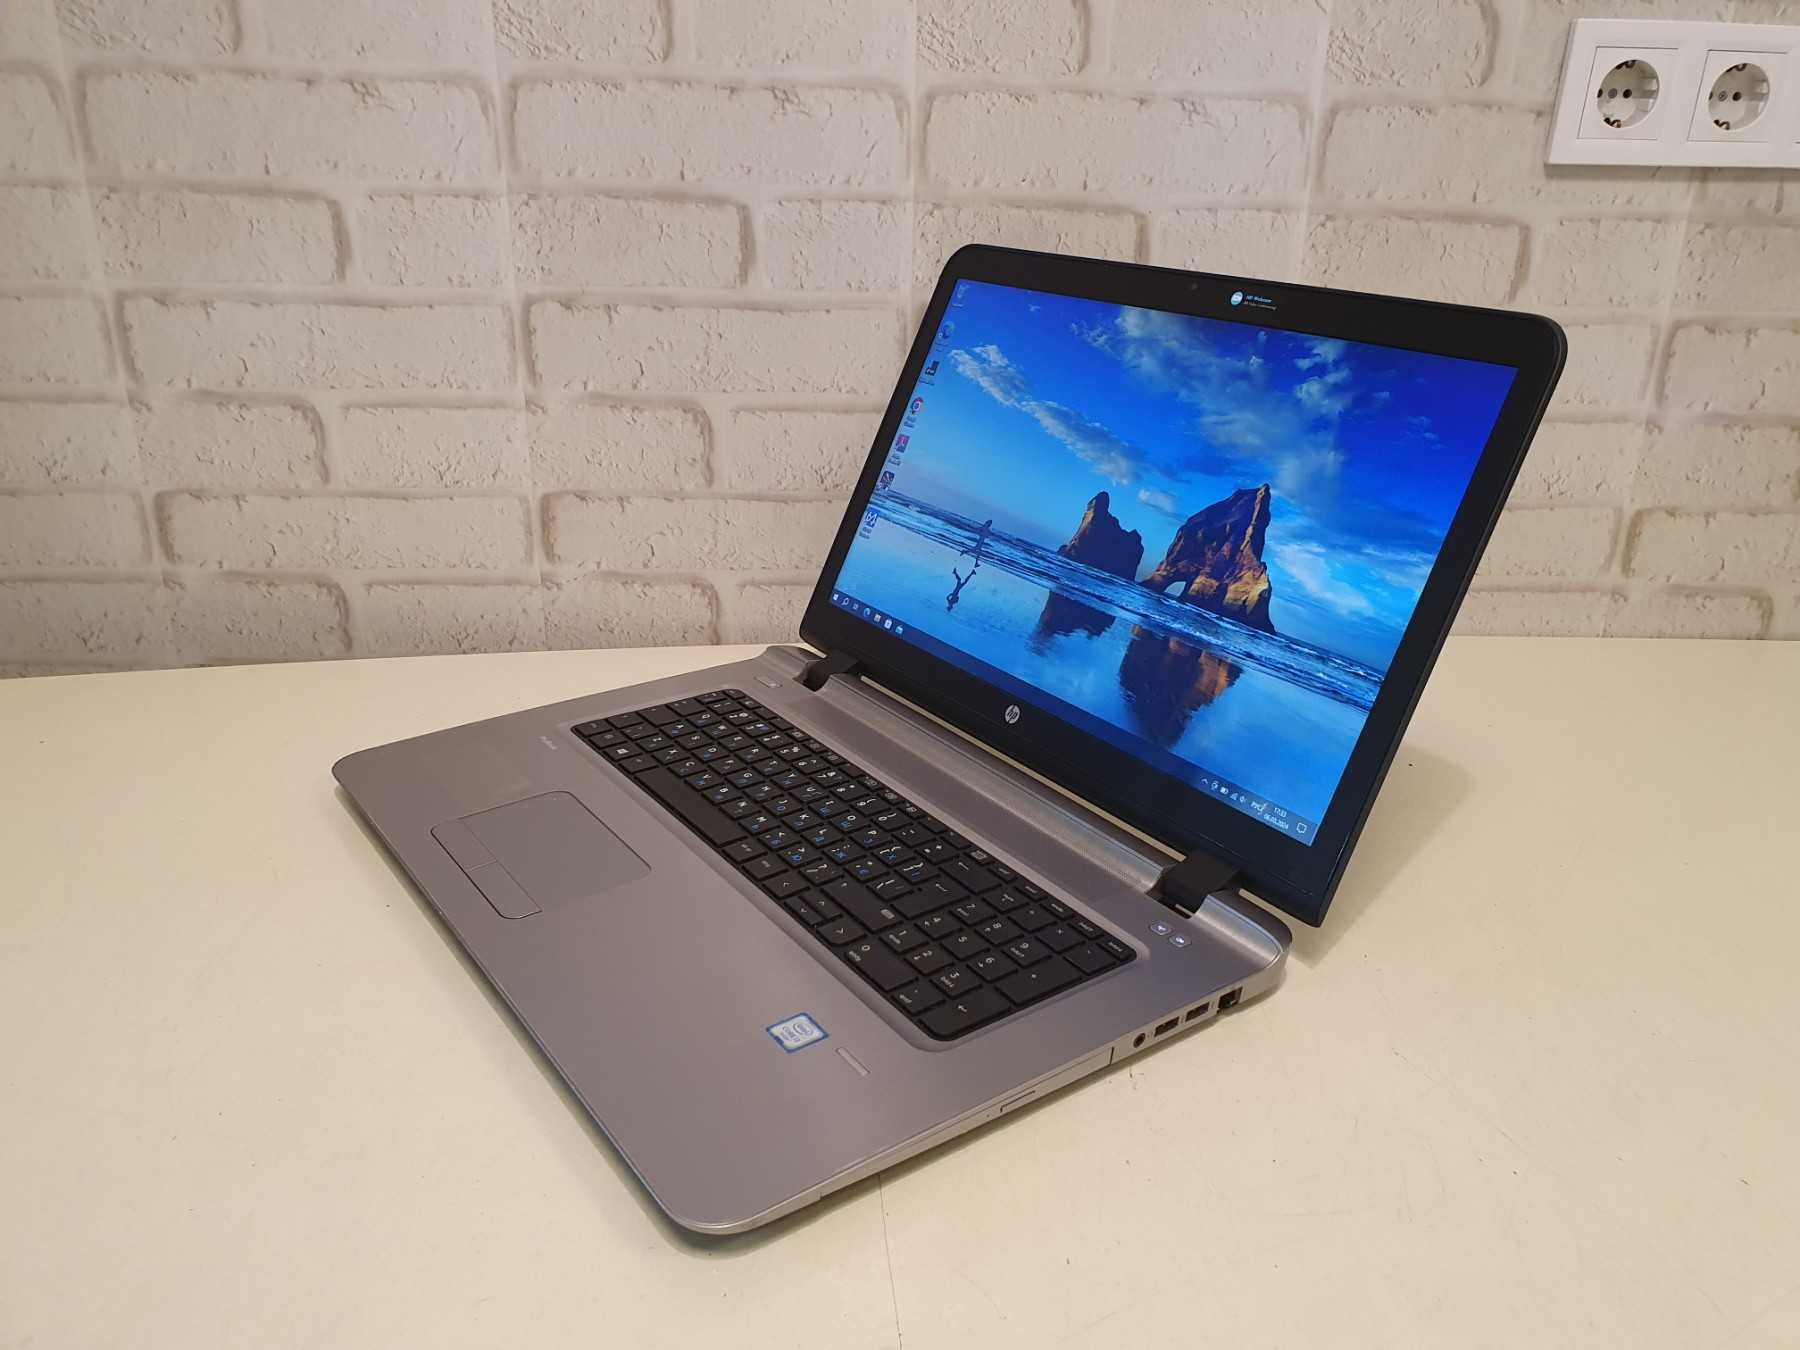 Ноутбук HP 470 G3 ∎17.3" экран∎i3-6100U∎DDR4-8GB∎Radeon R7∎гар-я 2года